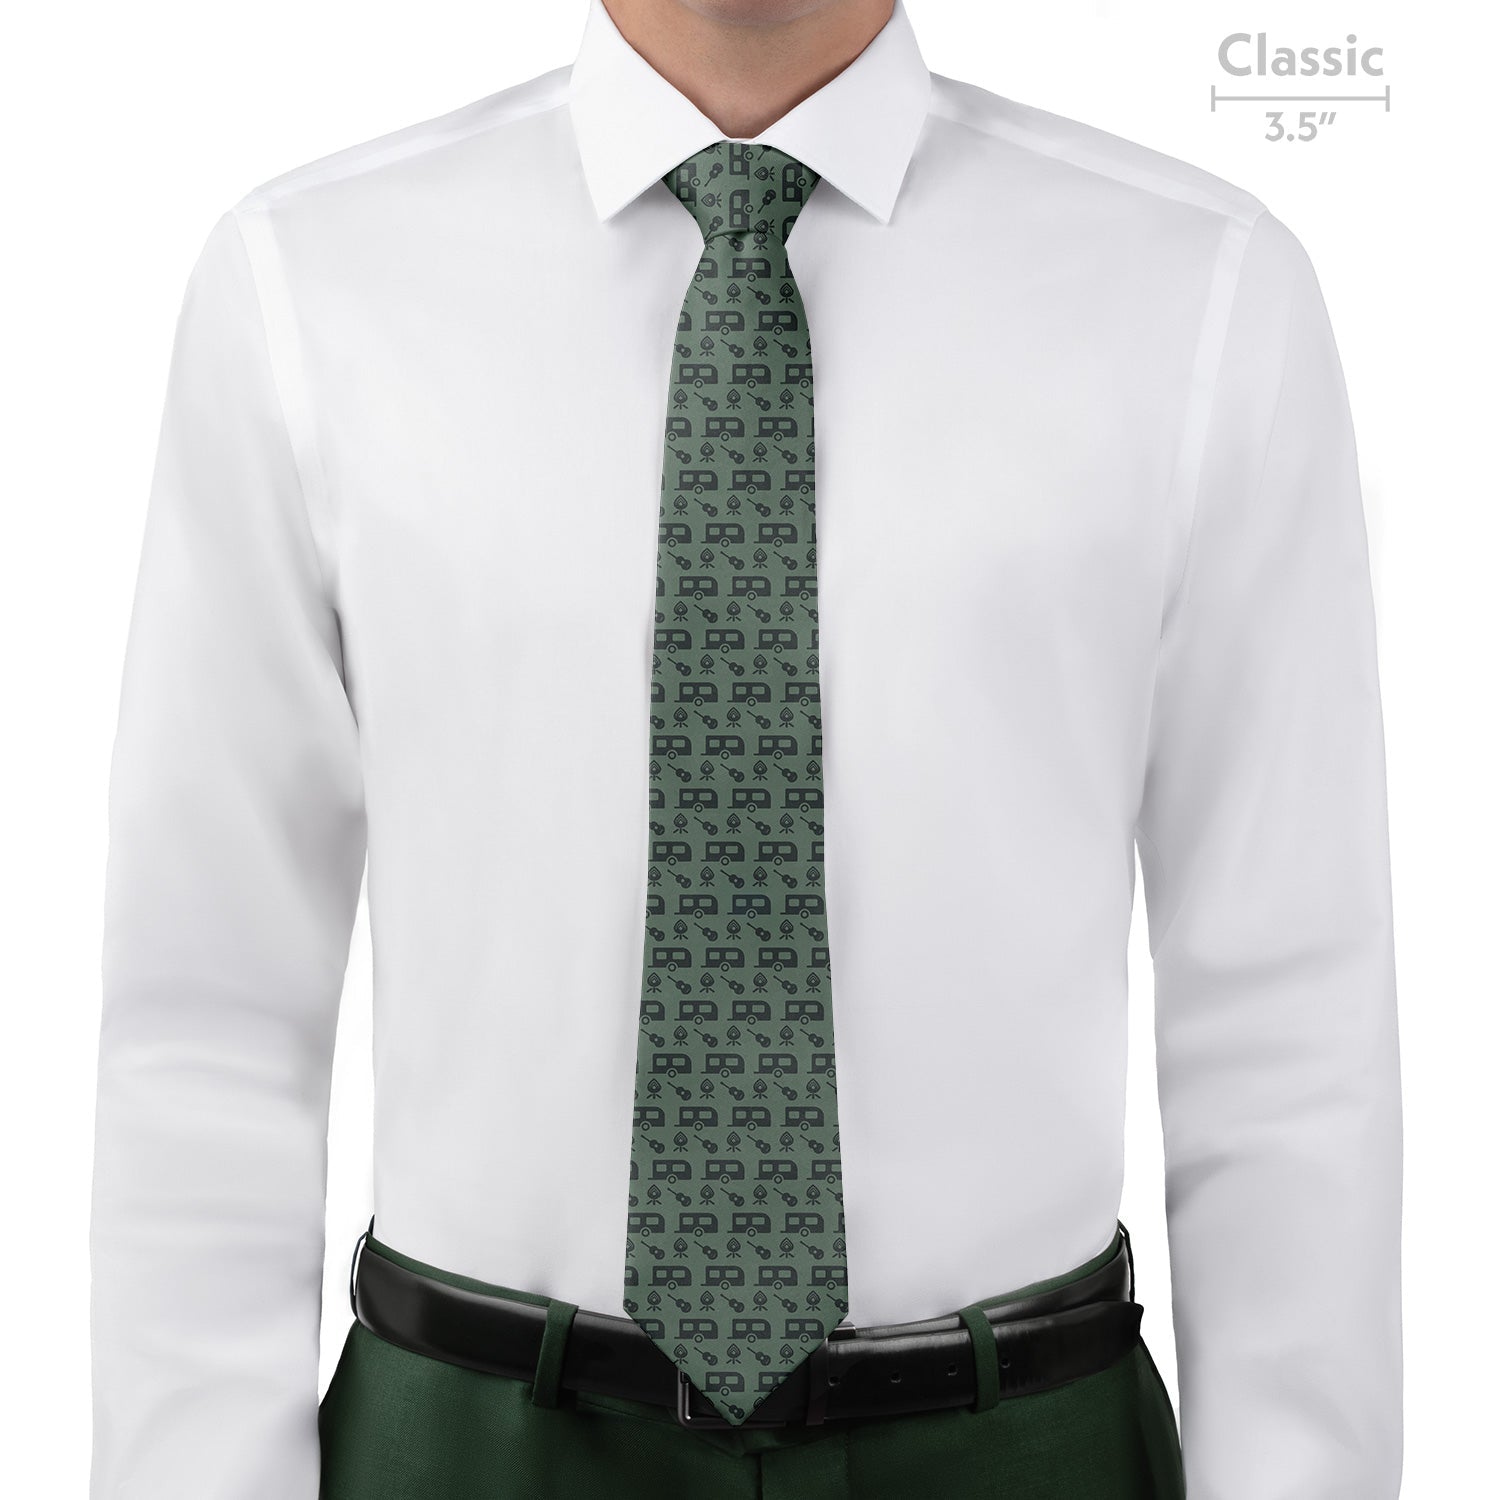 Happy Camper Necktie - Classic - Knotty Tie Co.